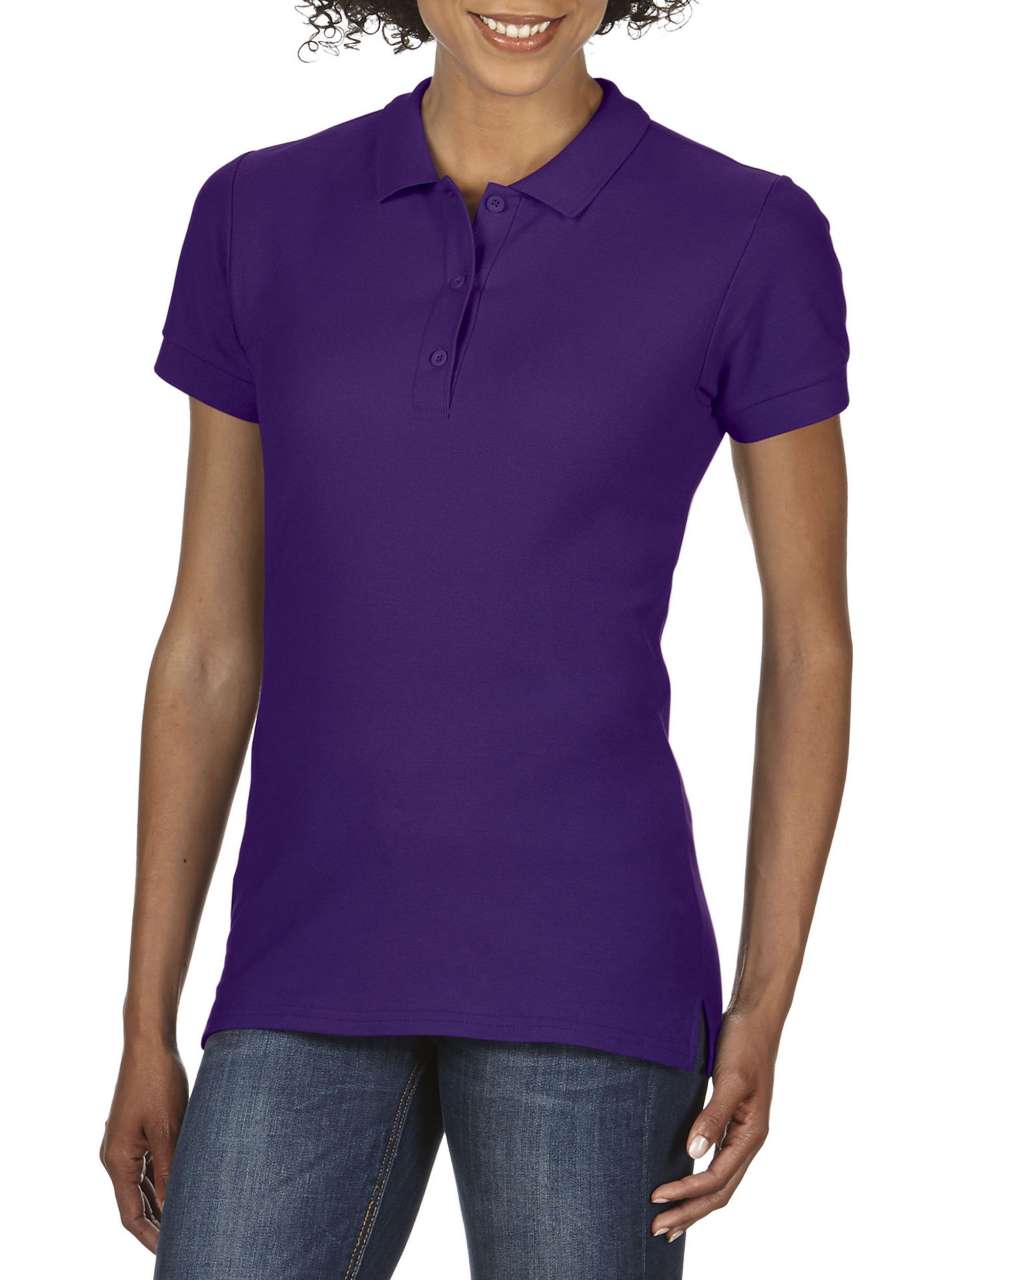 PREMIUM COTTON®, ženska polo majica kratkih rukava s tiskom (opcija) 